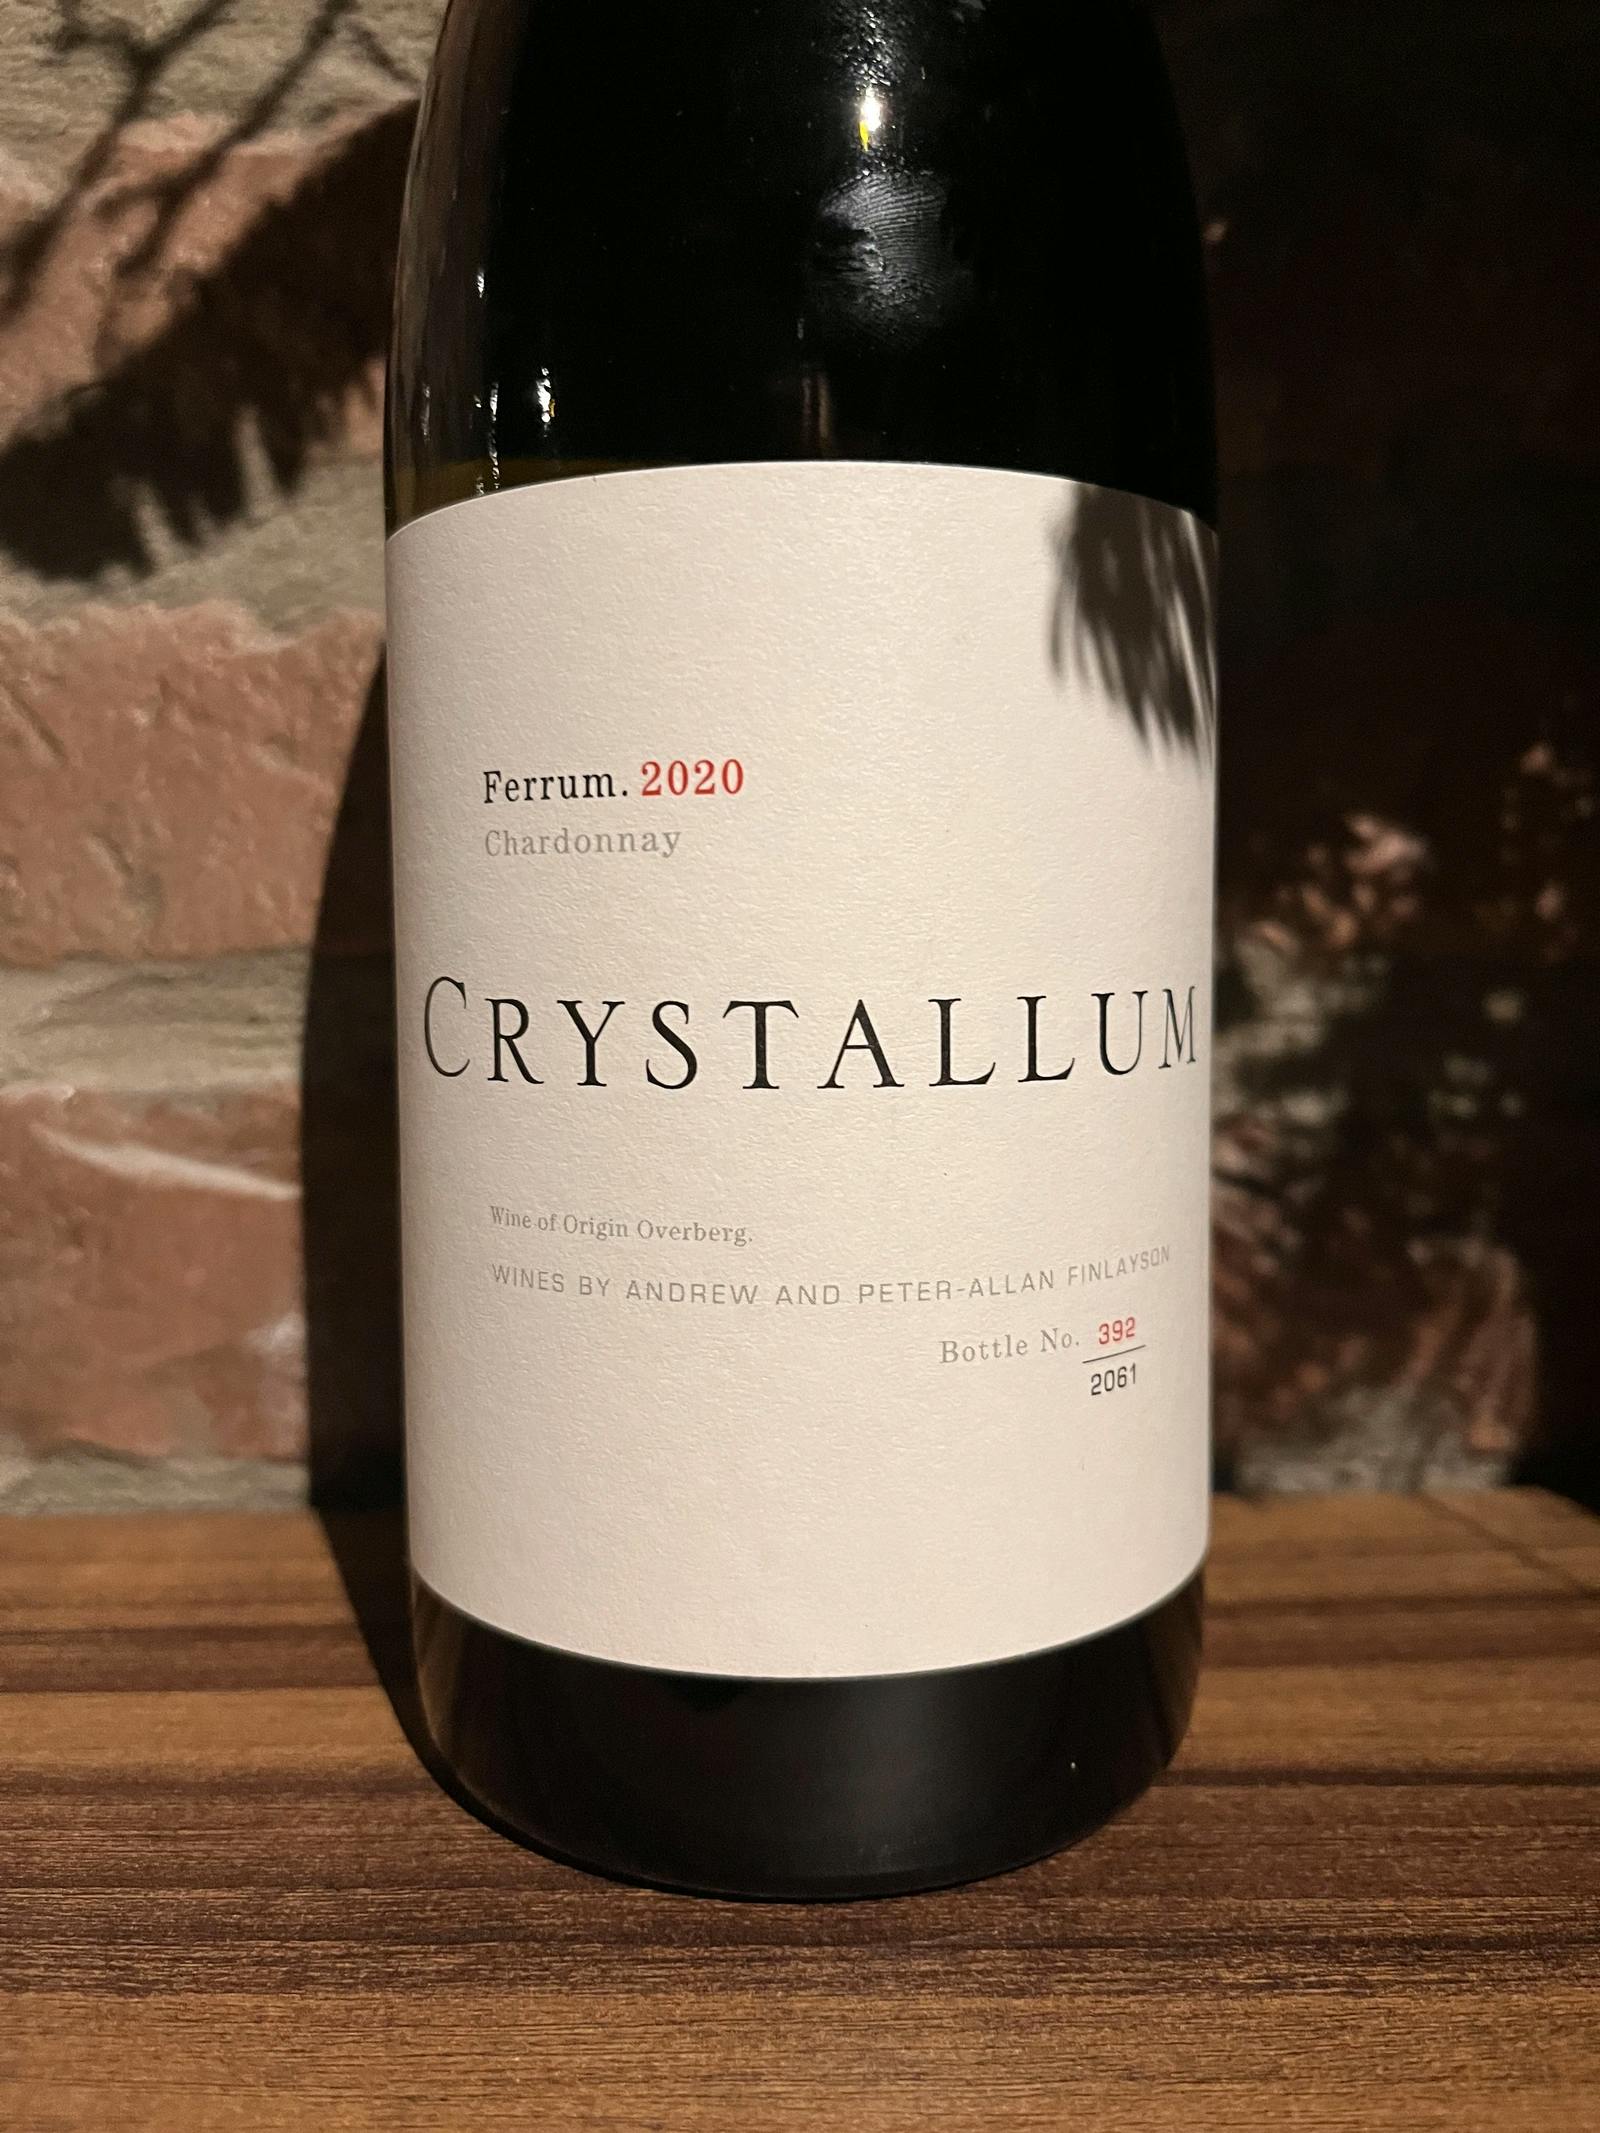 Crystallum Ferrum Chardonnay 2020